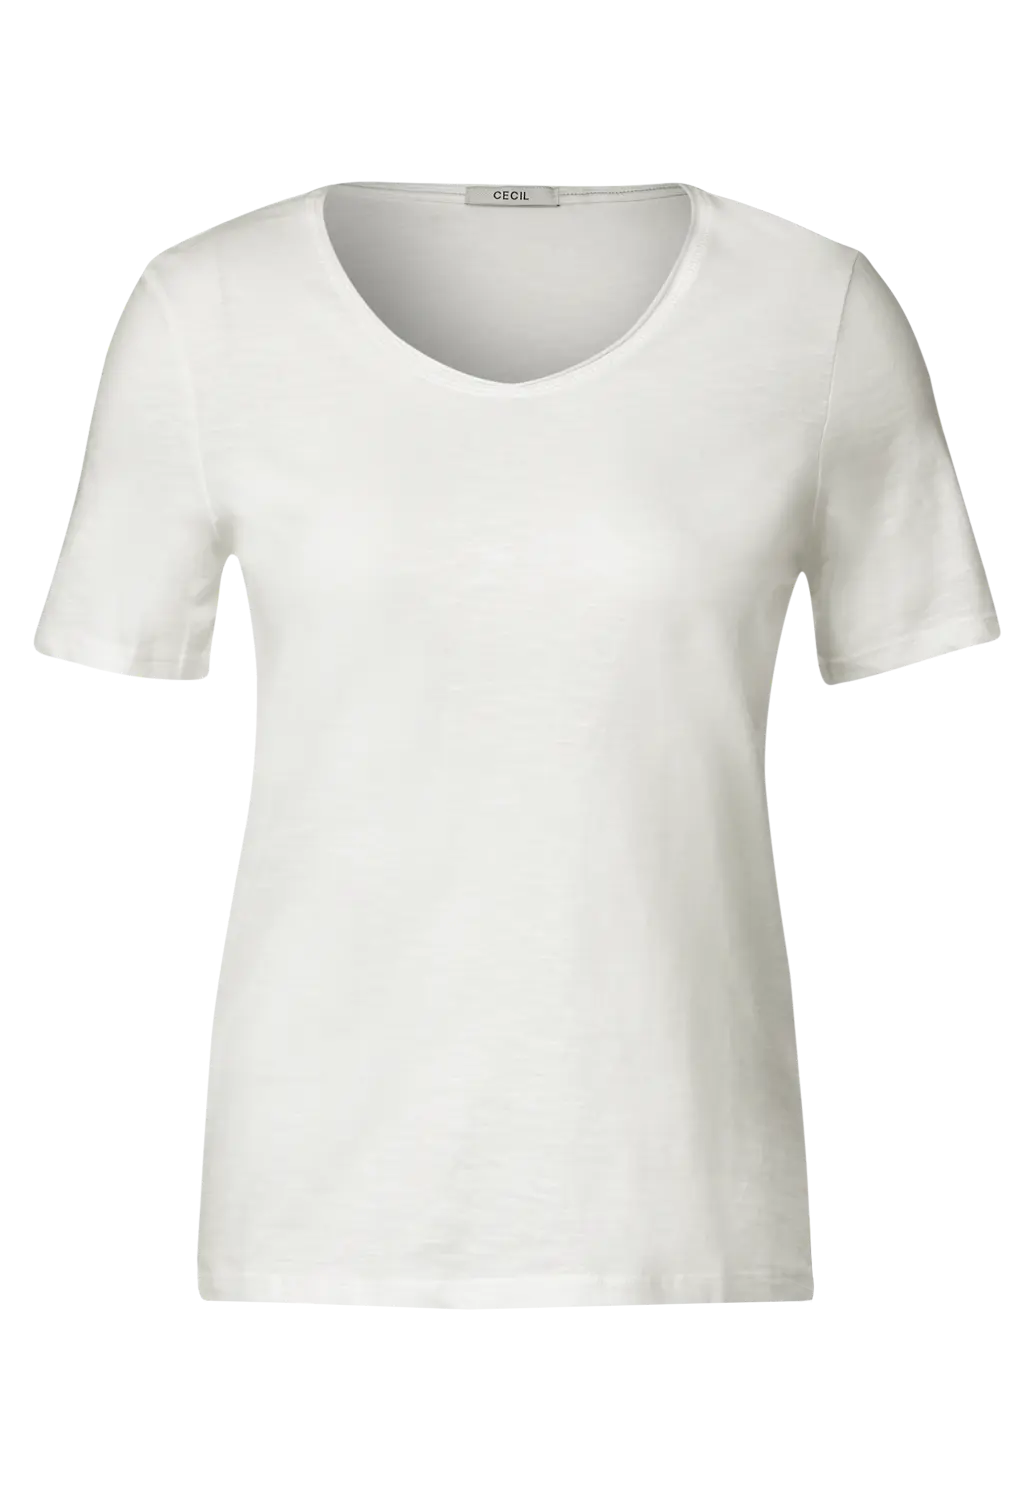 Vanilla - T-Shirt White Unifarbe Cotton in | Blues CECIL - Basic